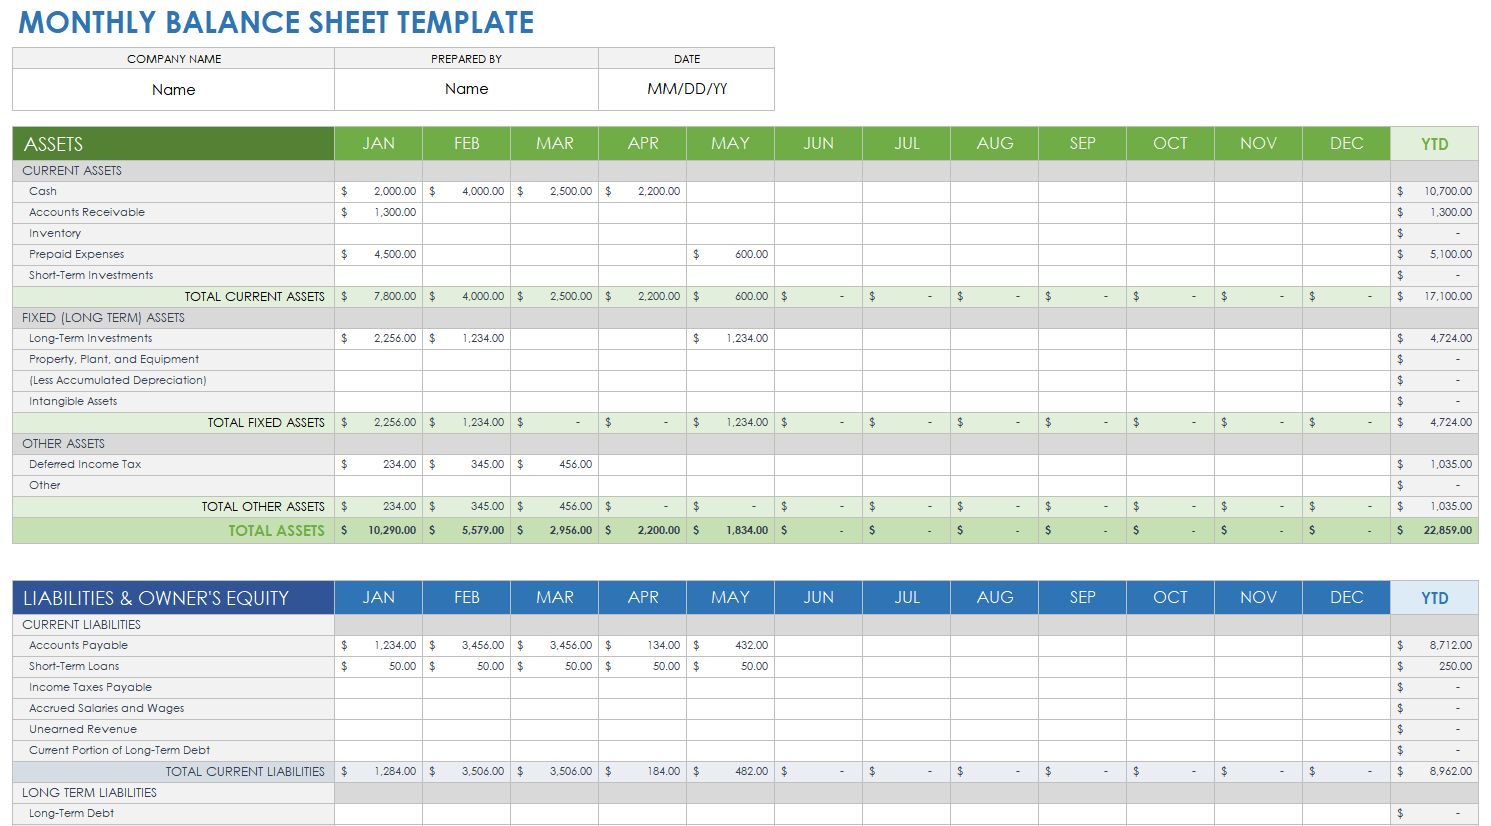 Monthly Balance Sheet Template